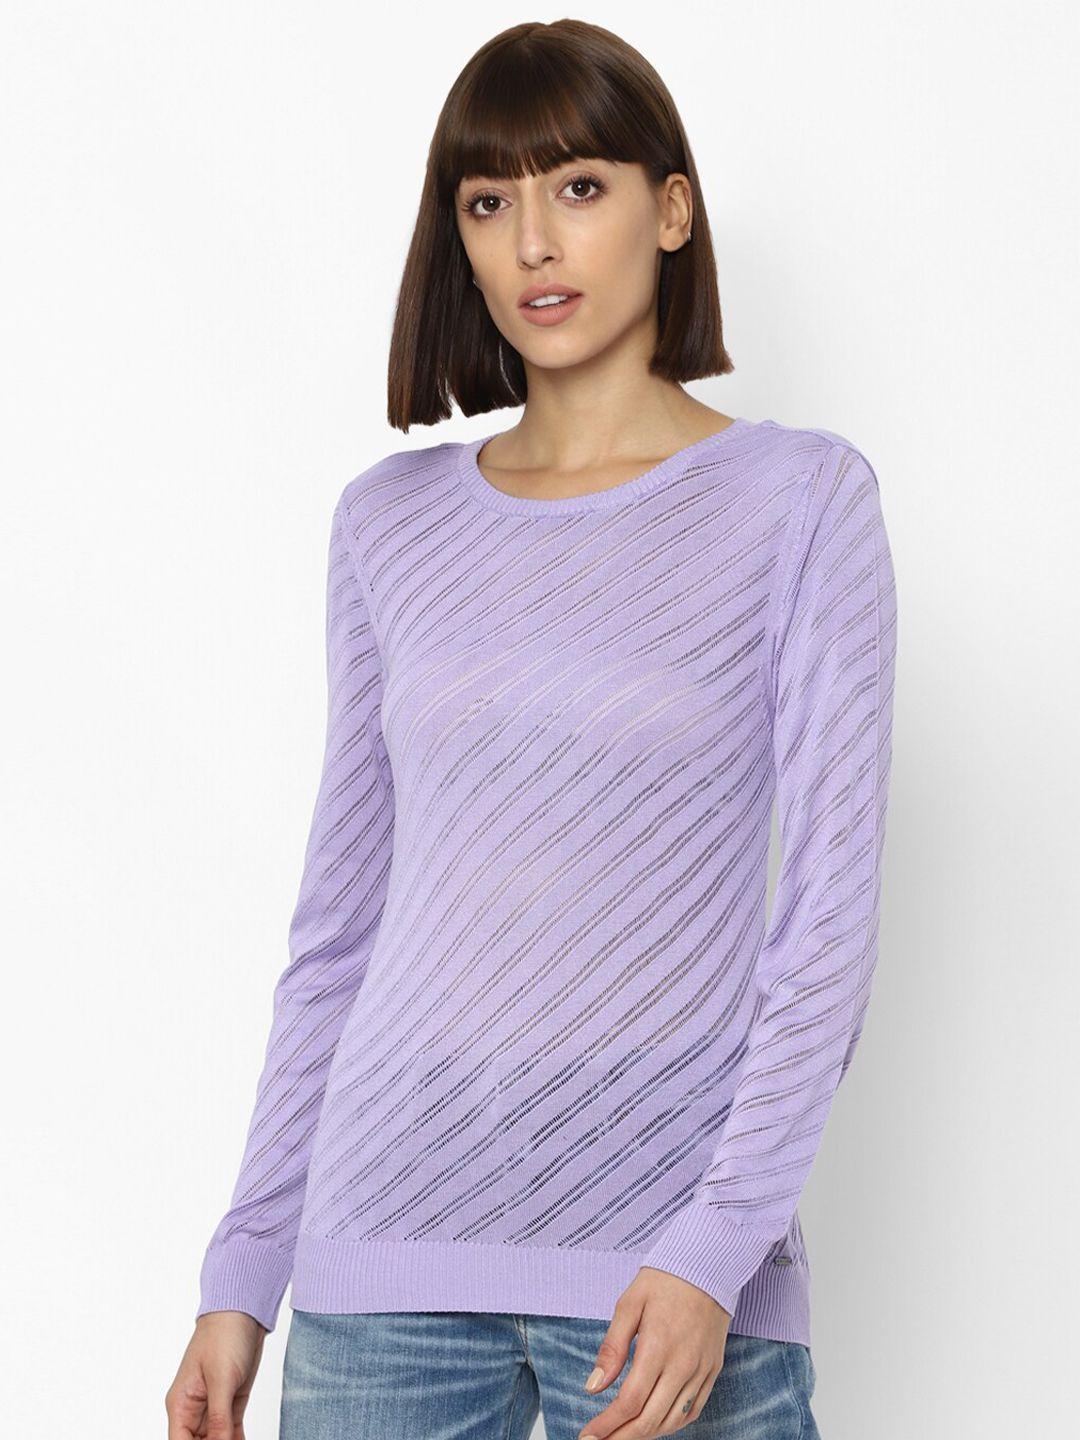 allen solly woman purple knitted regular top